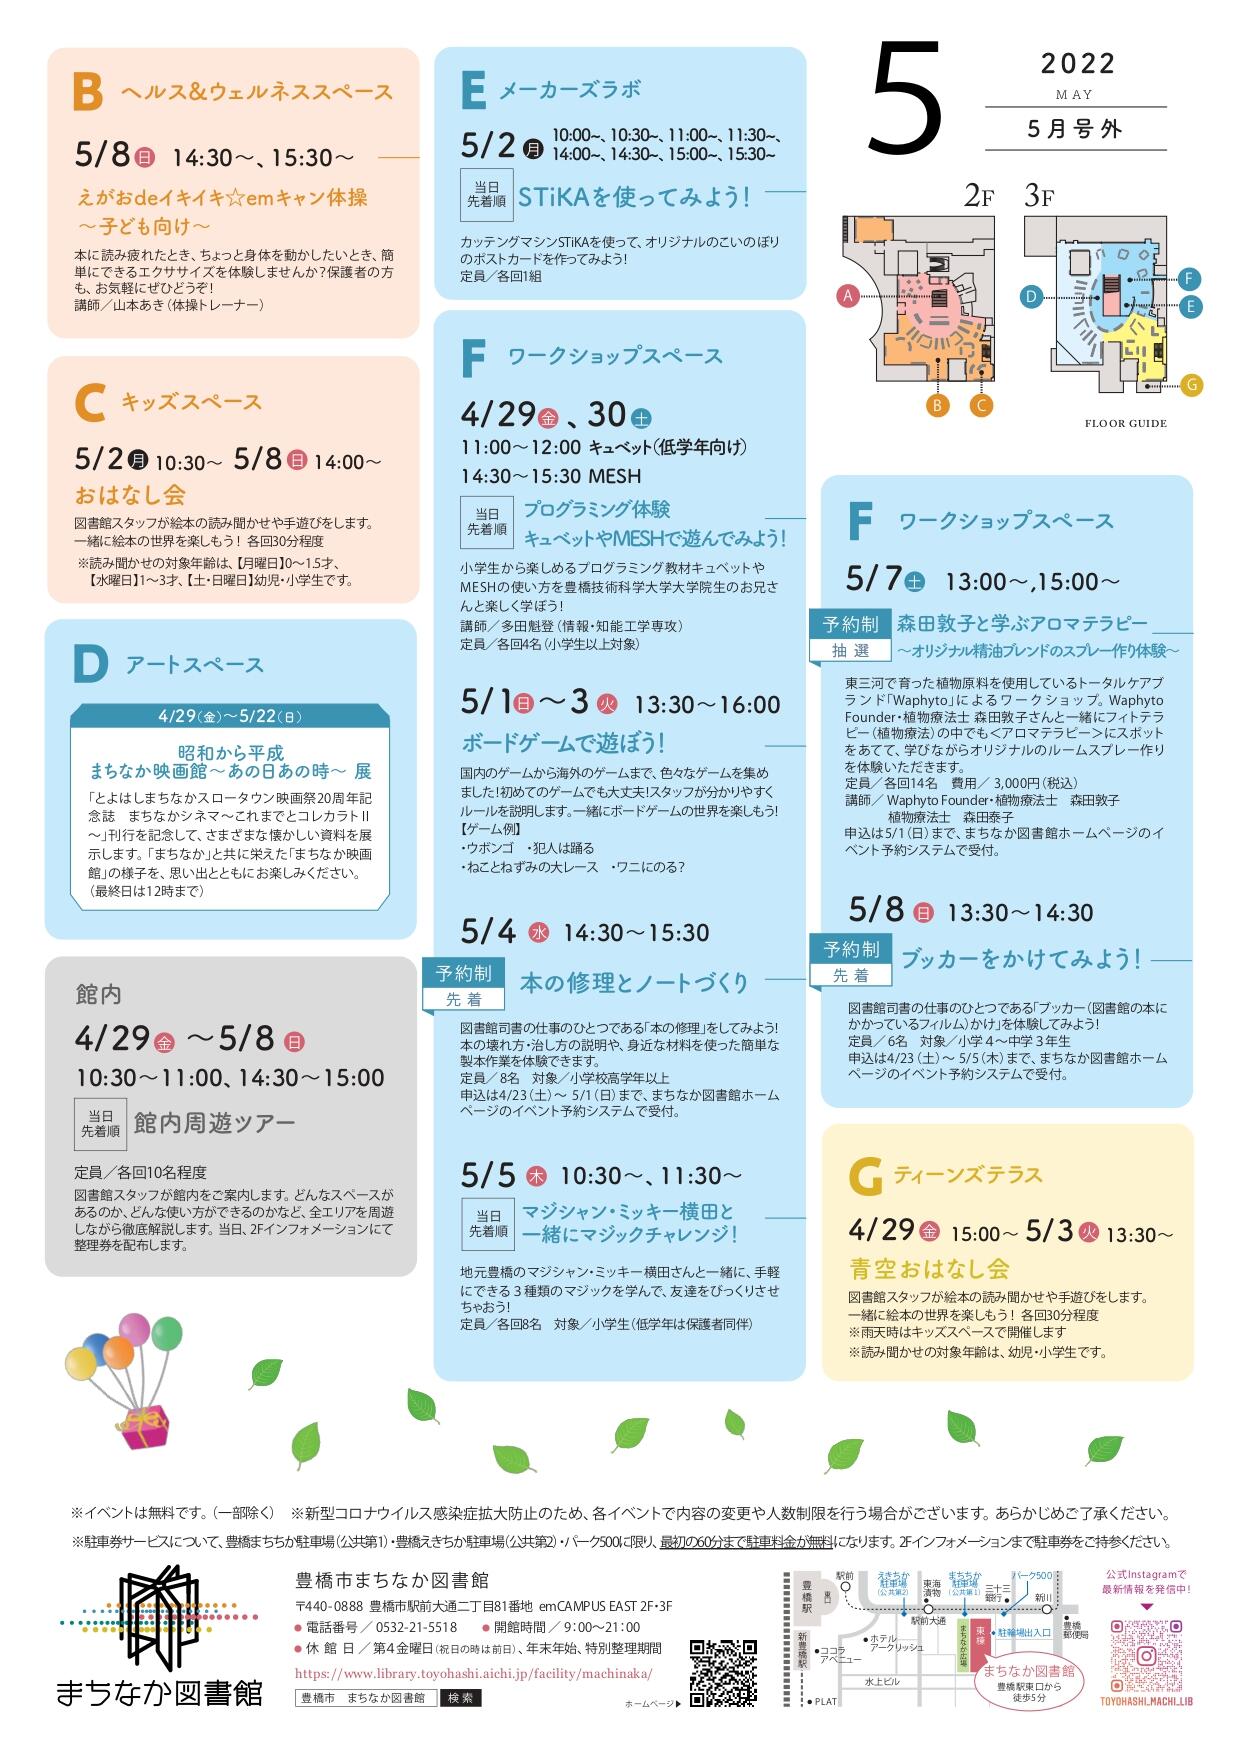 https://www.library.toyohashi.aichi.jp/facility/machinaka/event/3145220e21e7ebd114a69c929d441777.jpg